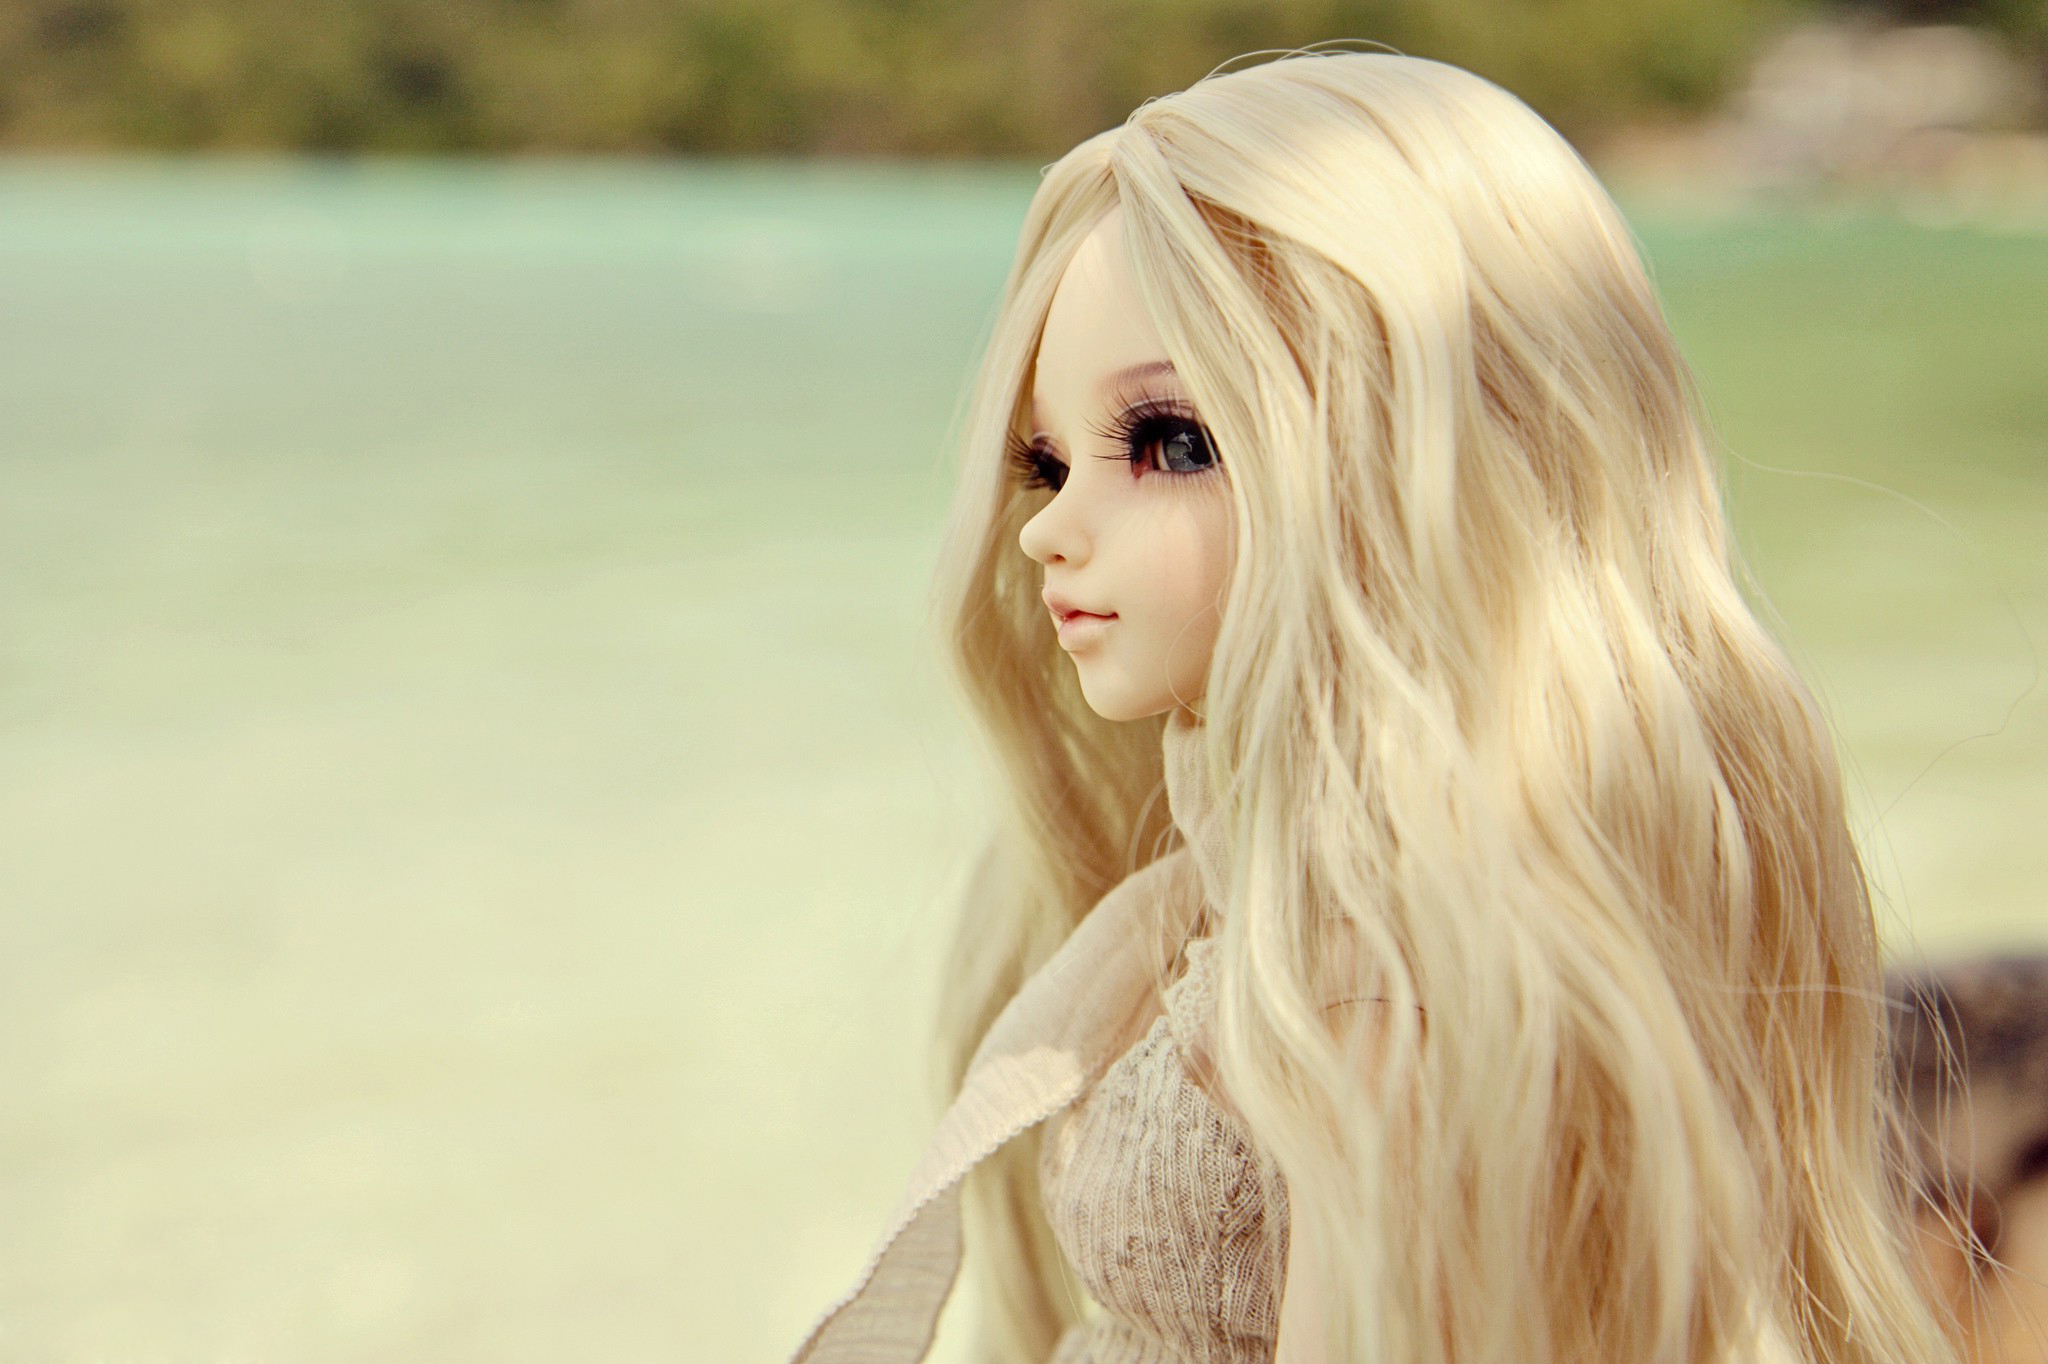 sad barbie doll with hair fantatic pics download